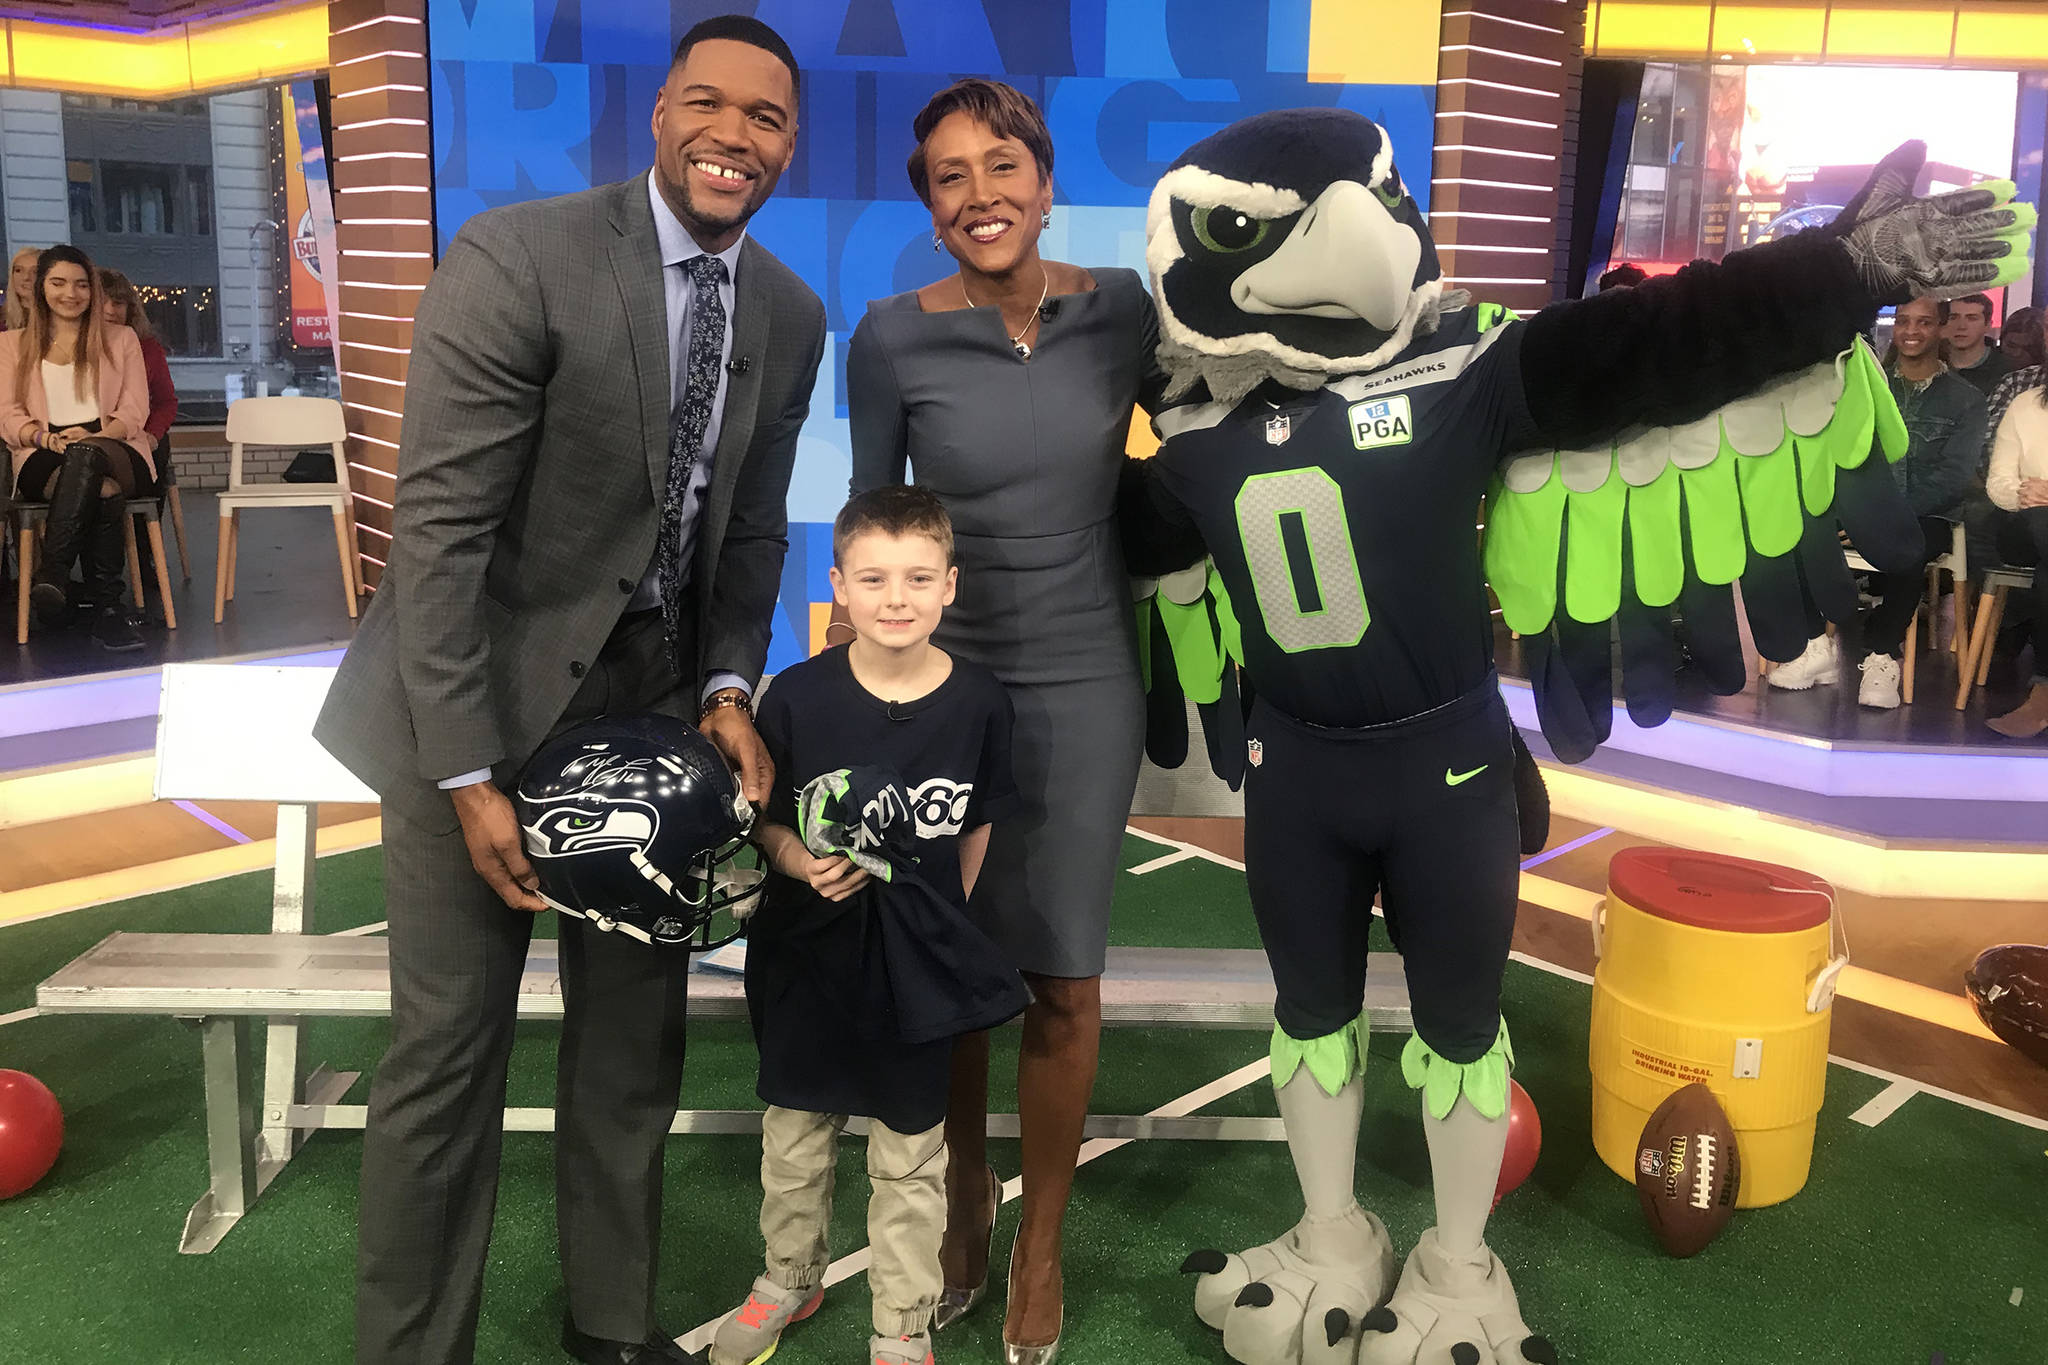 Dream come true: 8-year-old wins trip to Super Bowl